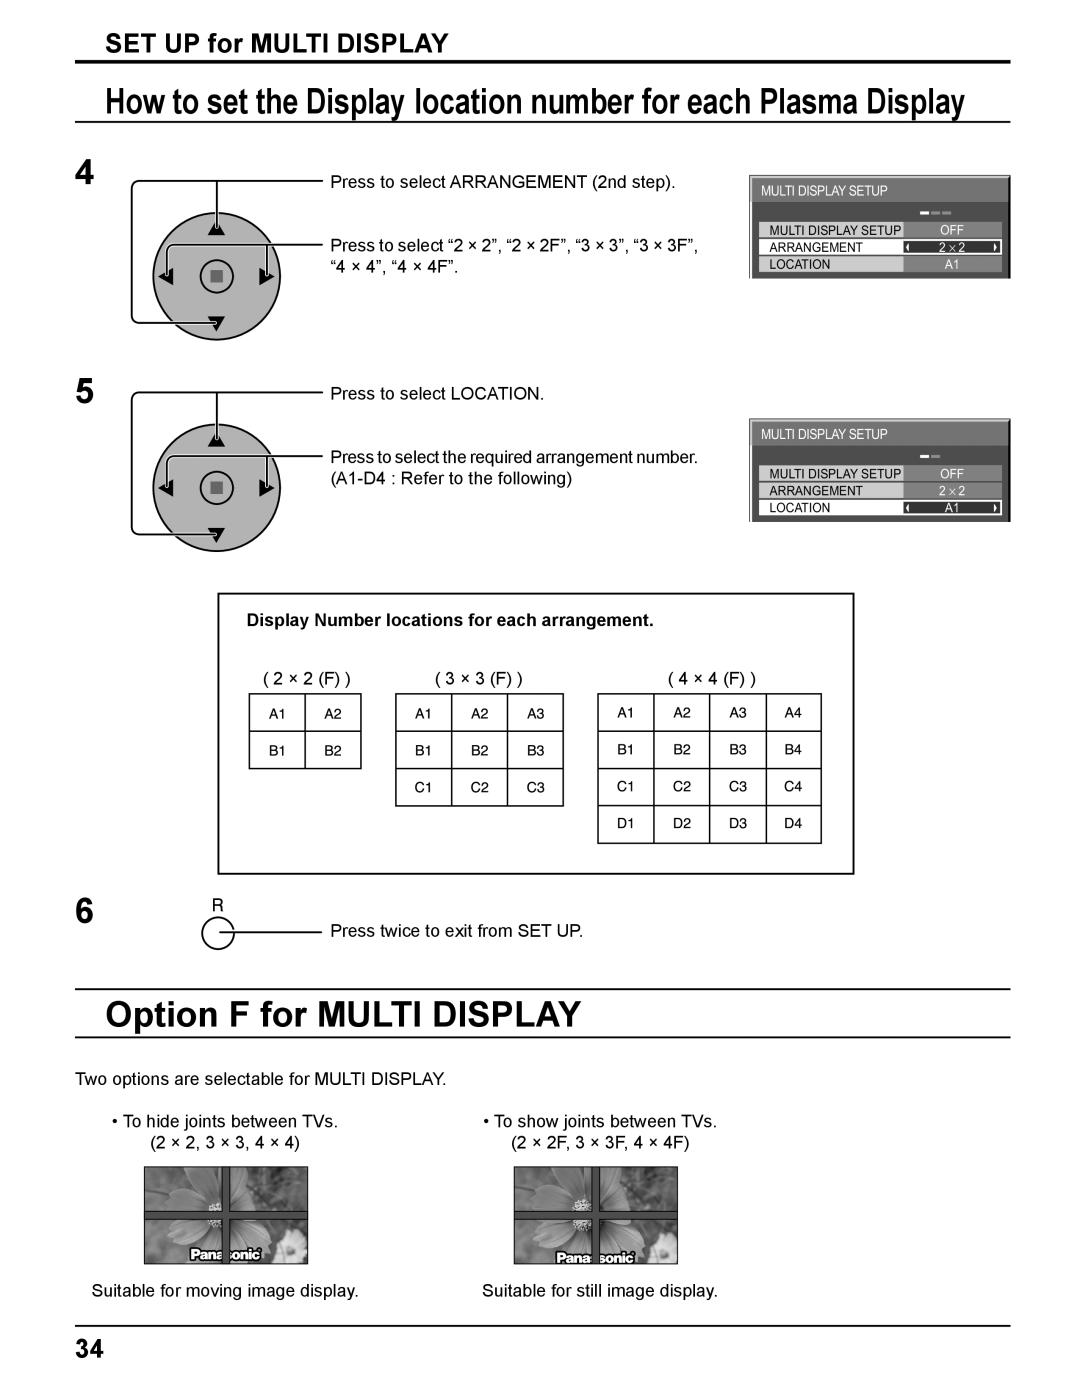 Panasonic TQBC2033 manual Option F for MULTI DISPLAY, SET UP for MULTI DISPLAY 